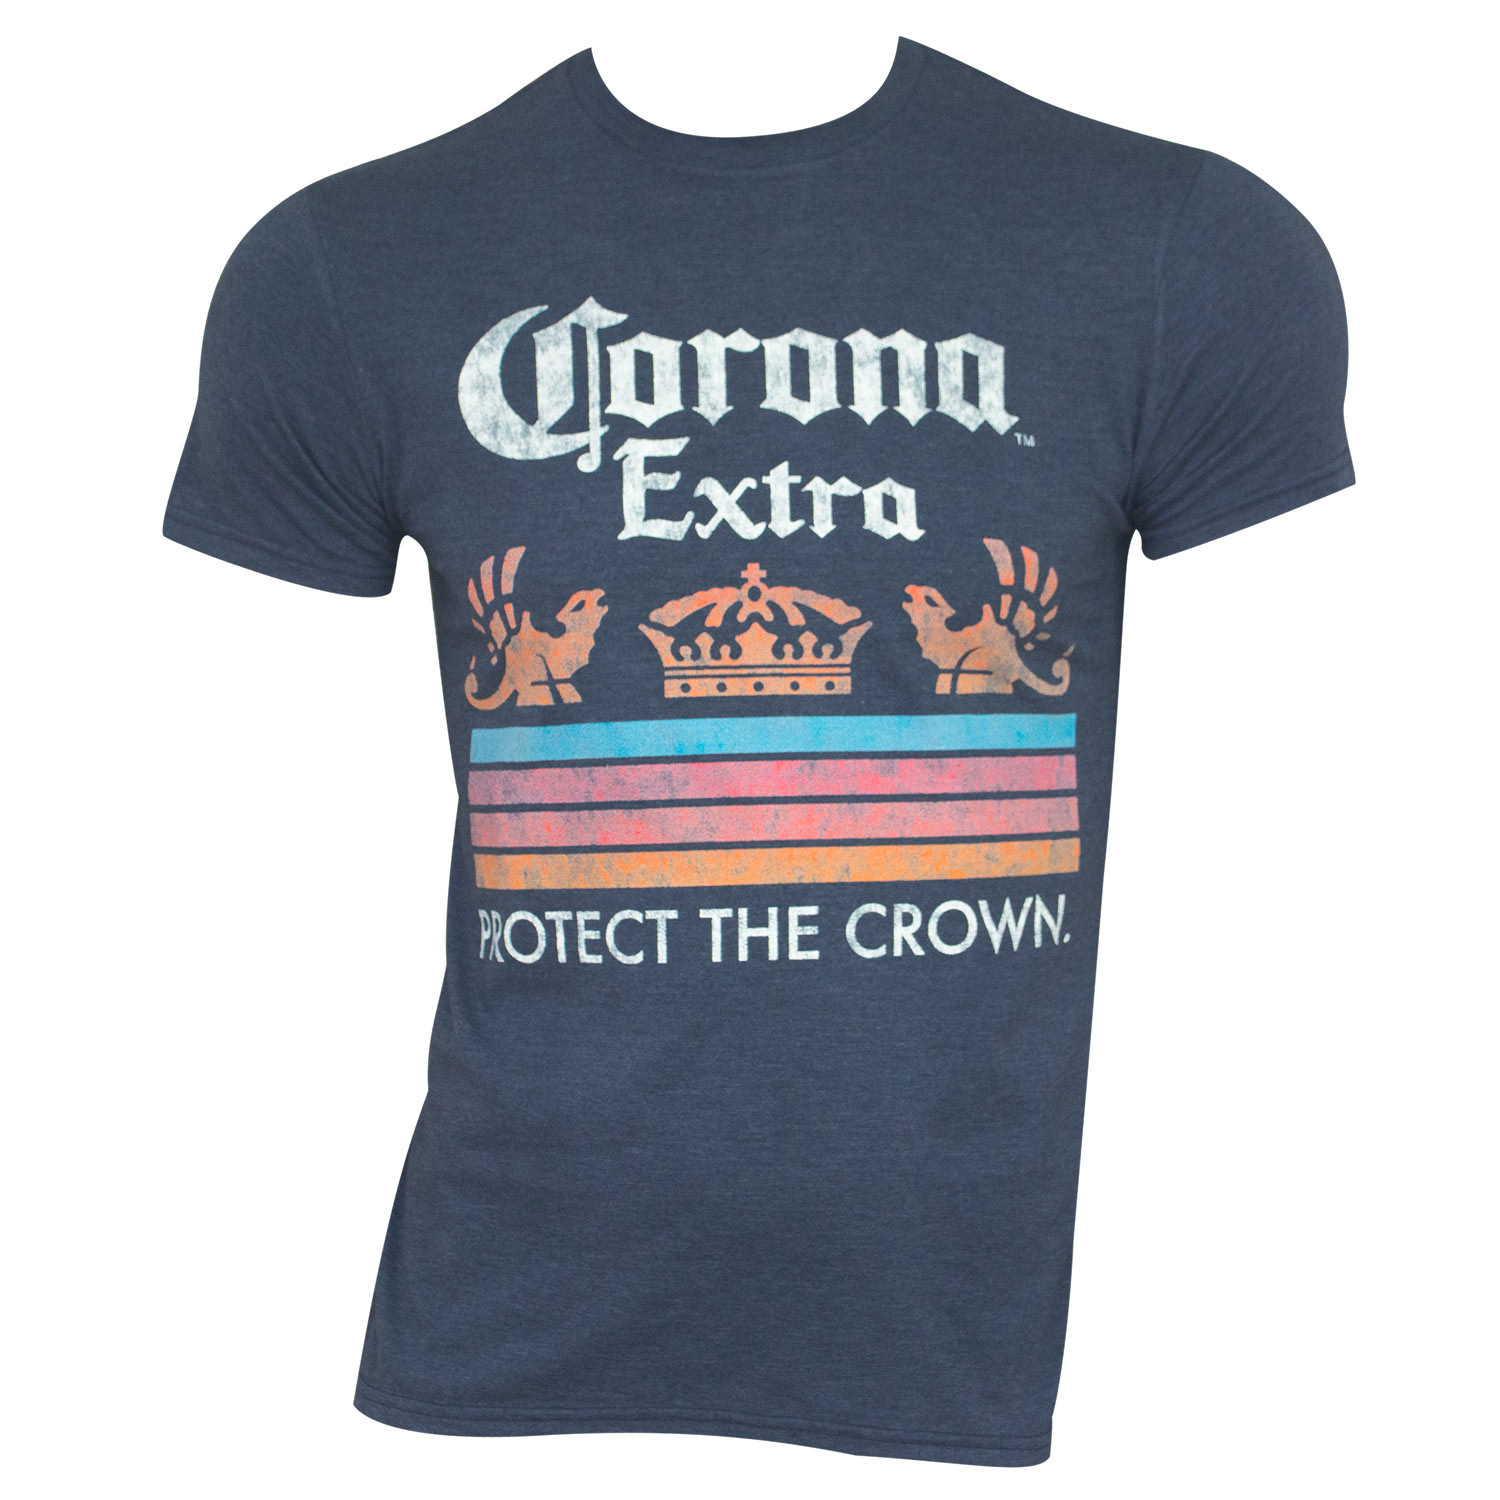 Corona Extra Protect The Crown Blue Tee Shirt